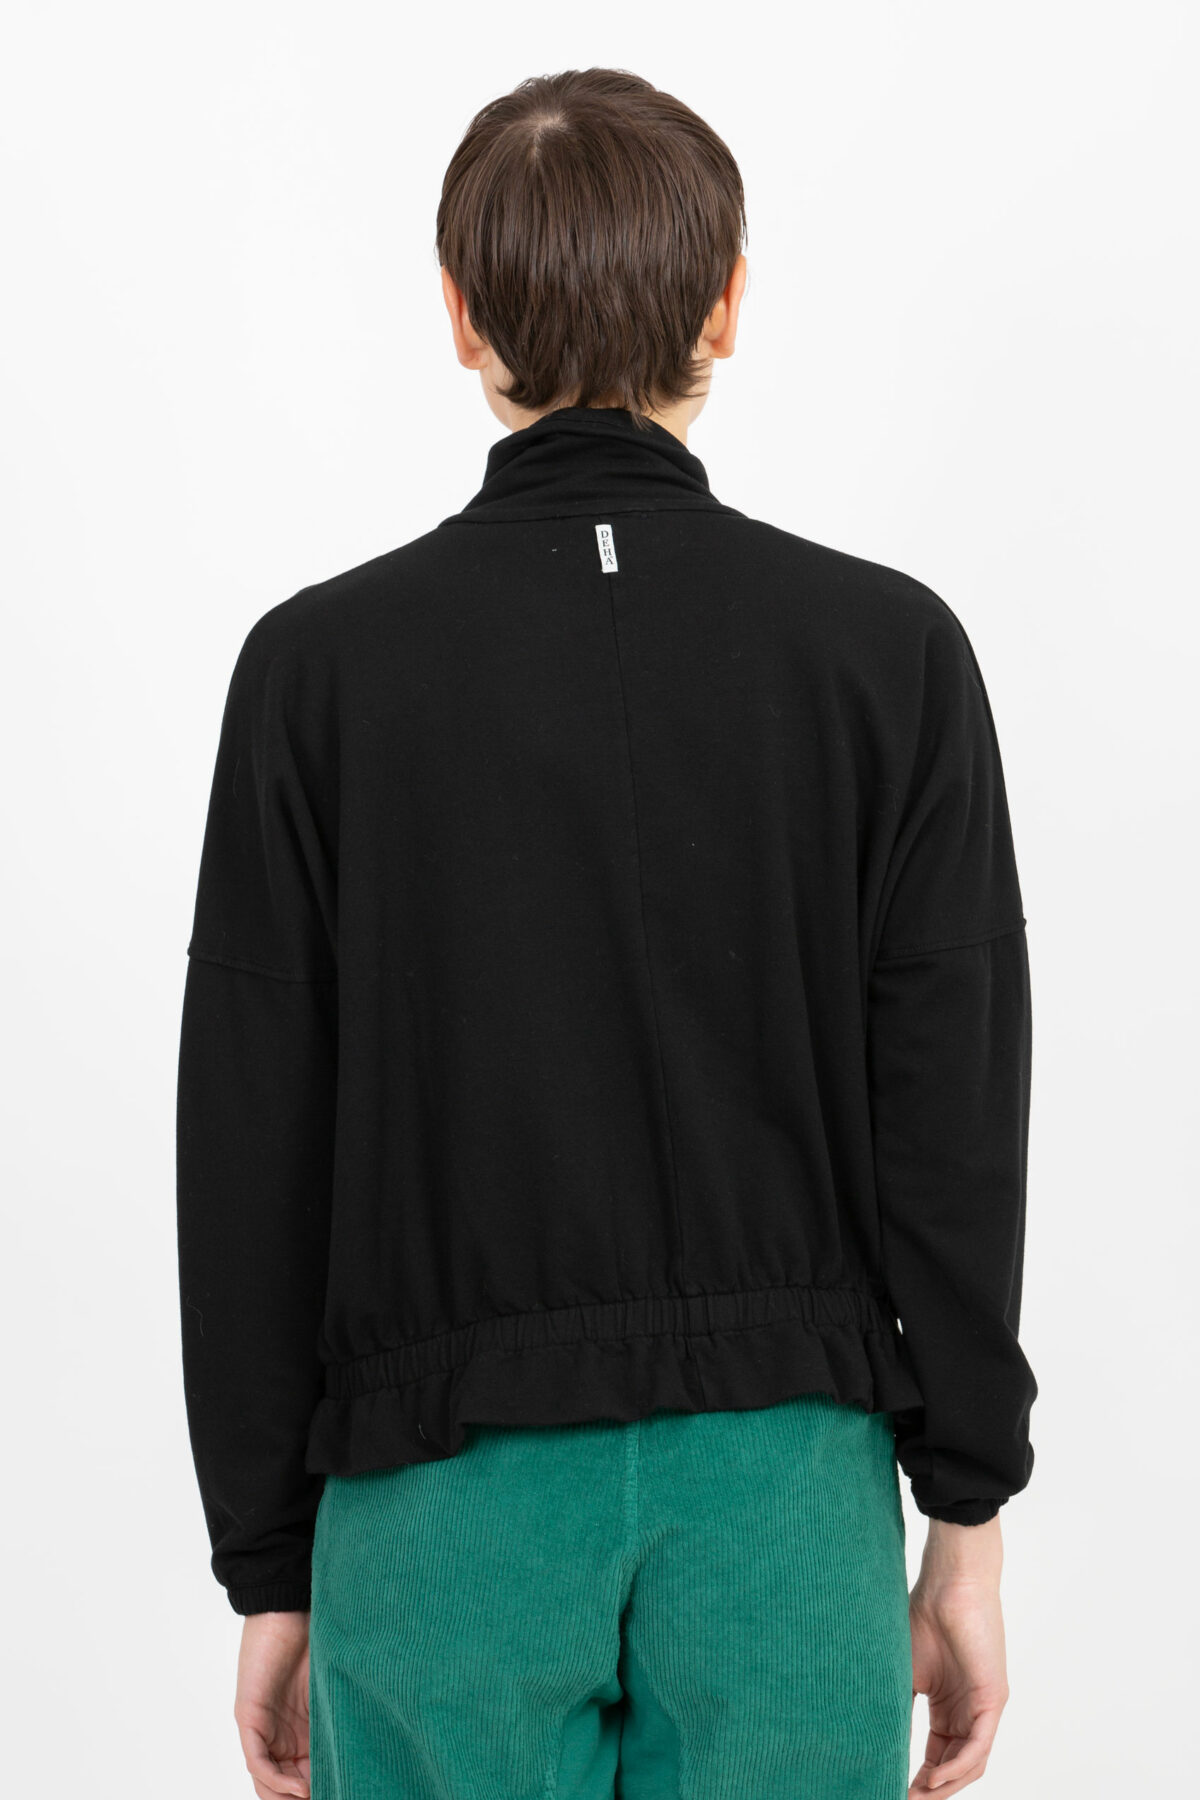 b74511-cozy-sweatshirt-zipper-deha-cotton-matchboxathens